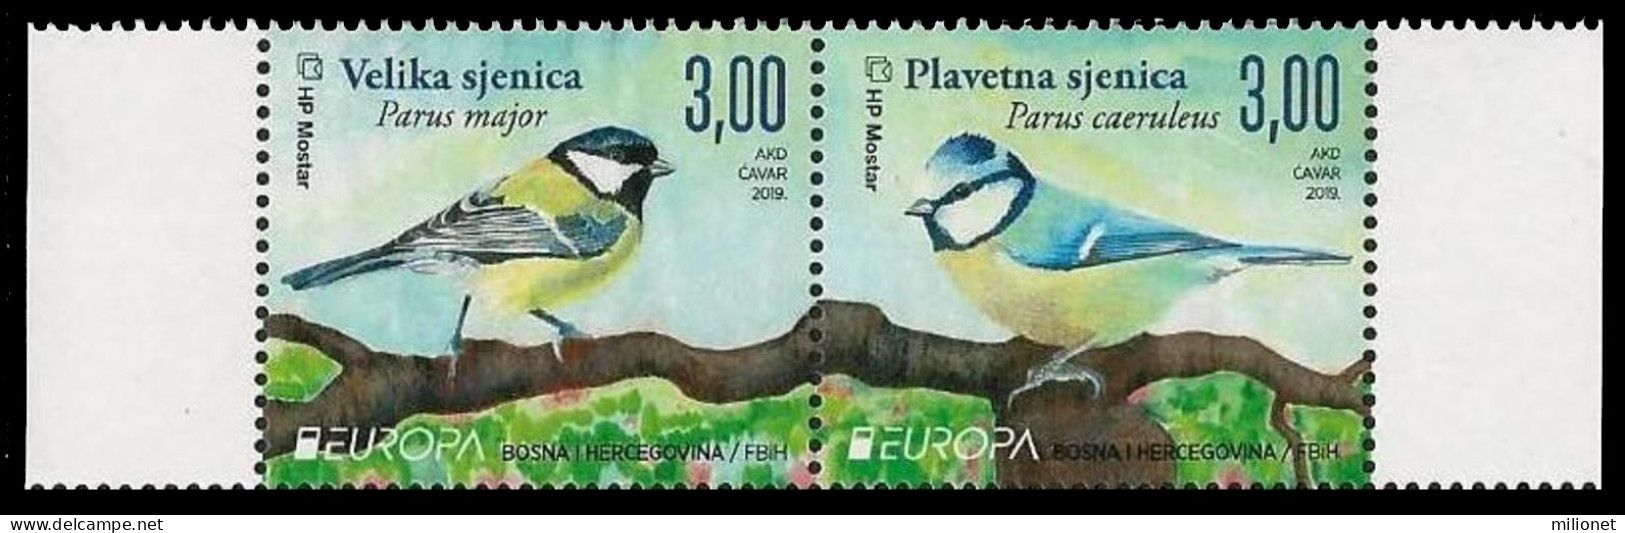 SALE!!! BOSNIA HERZEGOVINA CROAT POST (MOSTAR) 2019 EUROPA National Birds 2 Stamps Se-tenant MNH ** - 2019